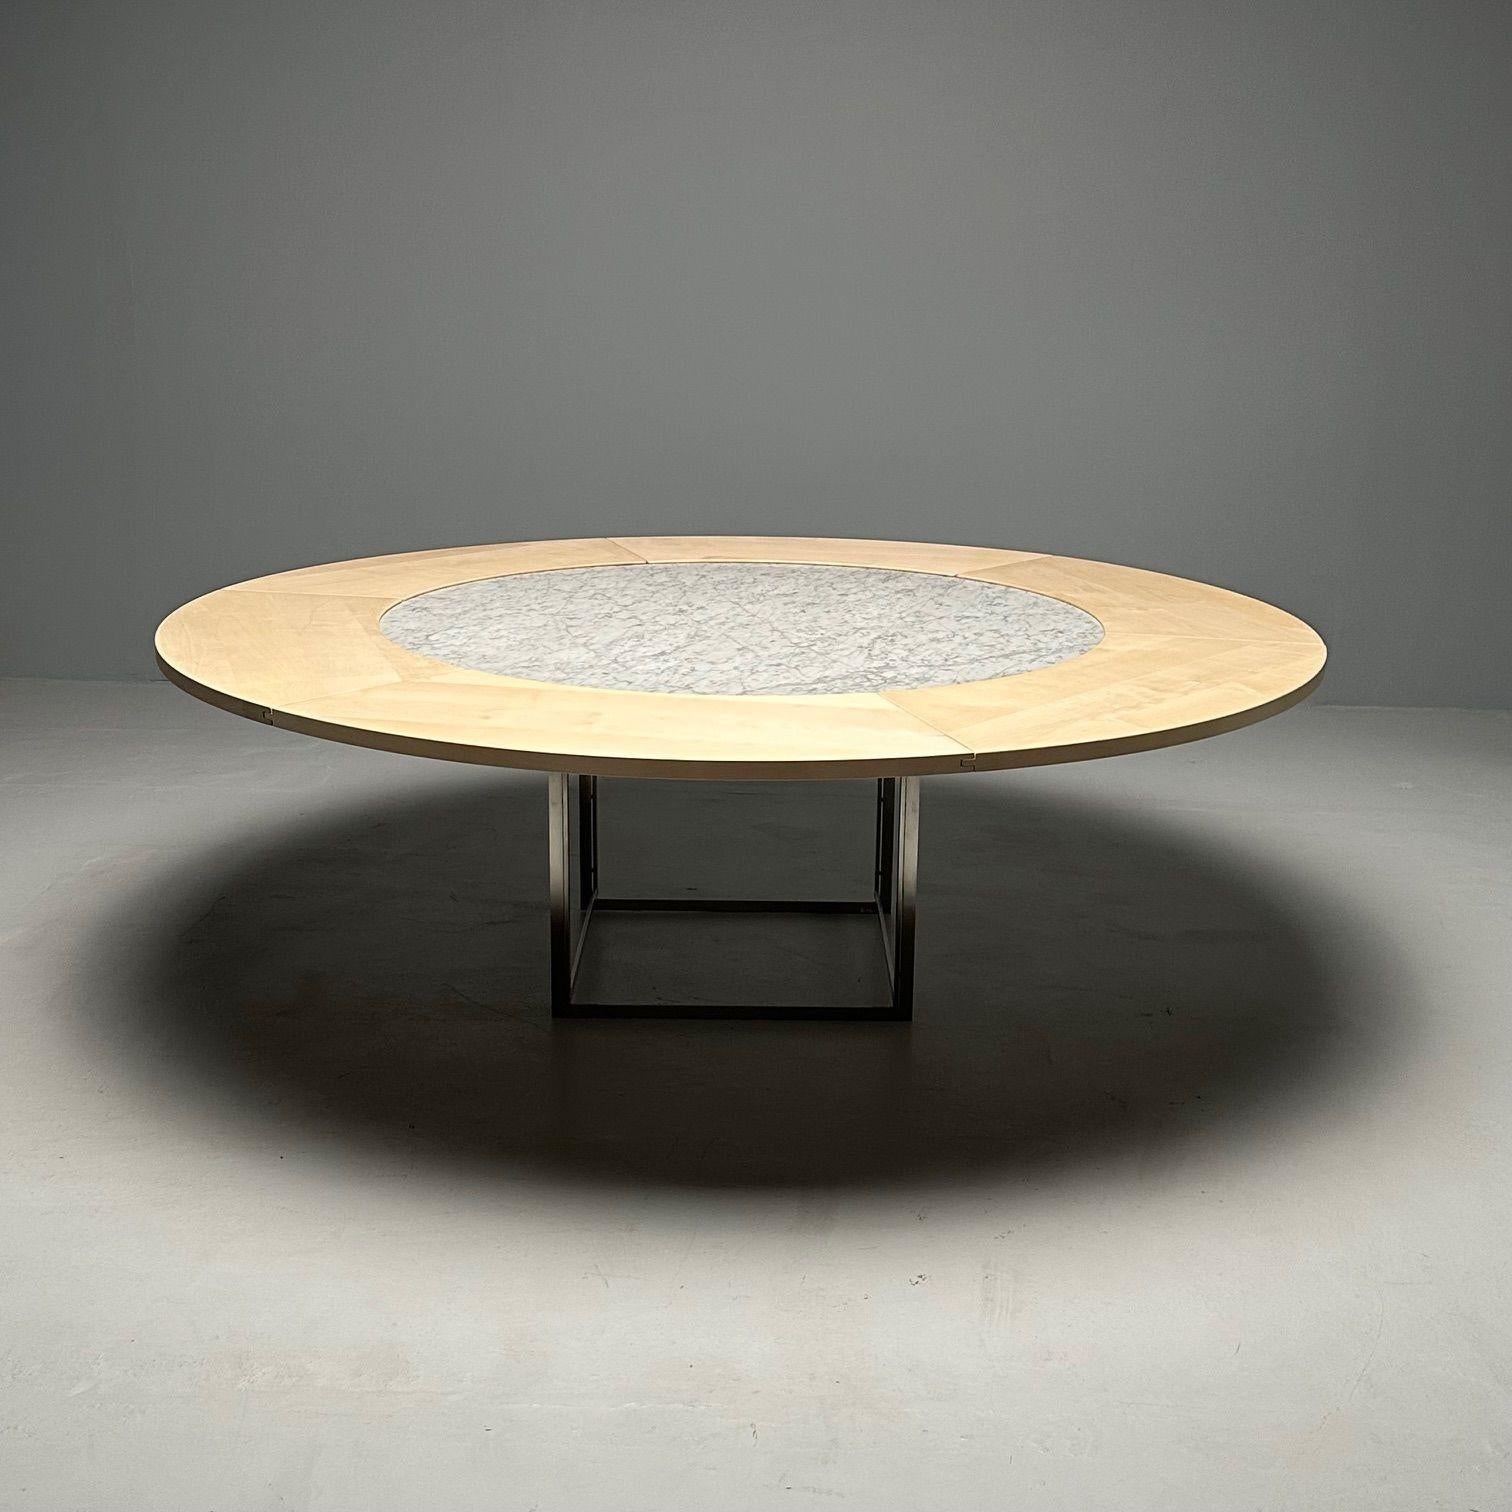 Poul Kjaerholm Mid-Century Modern PK-54 Dining Table, Marble, Maple, Steel, 2011 For Sale 3